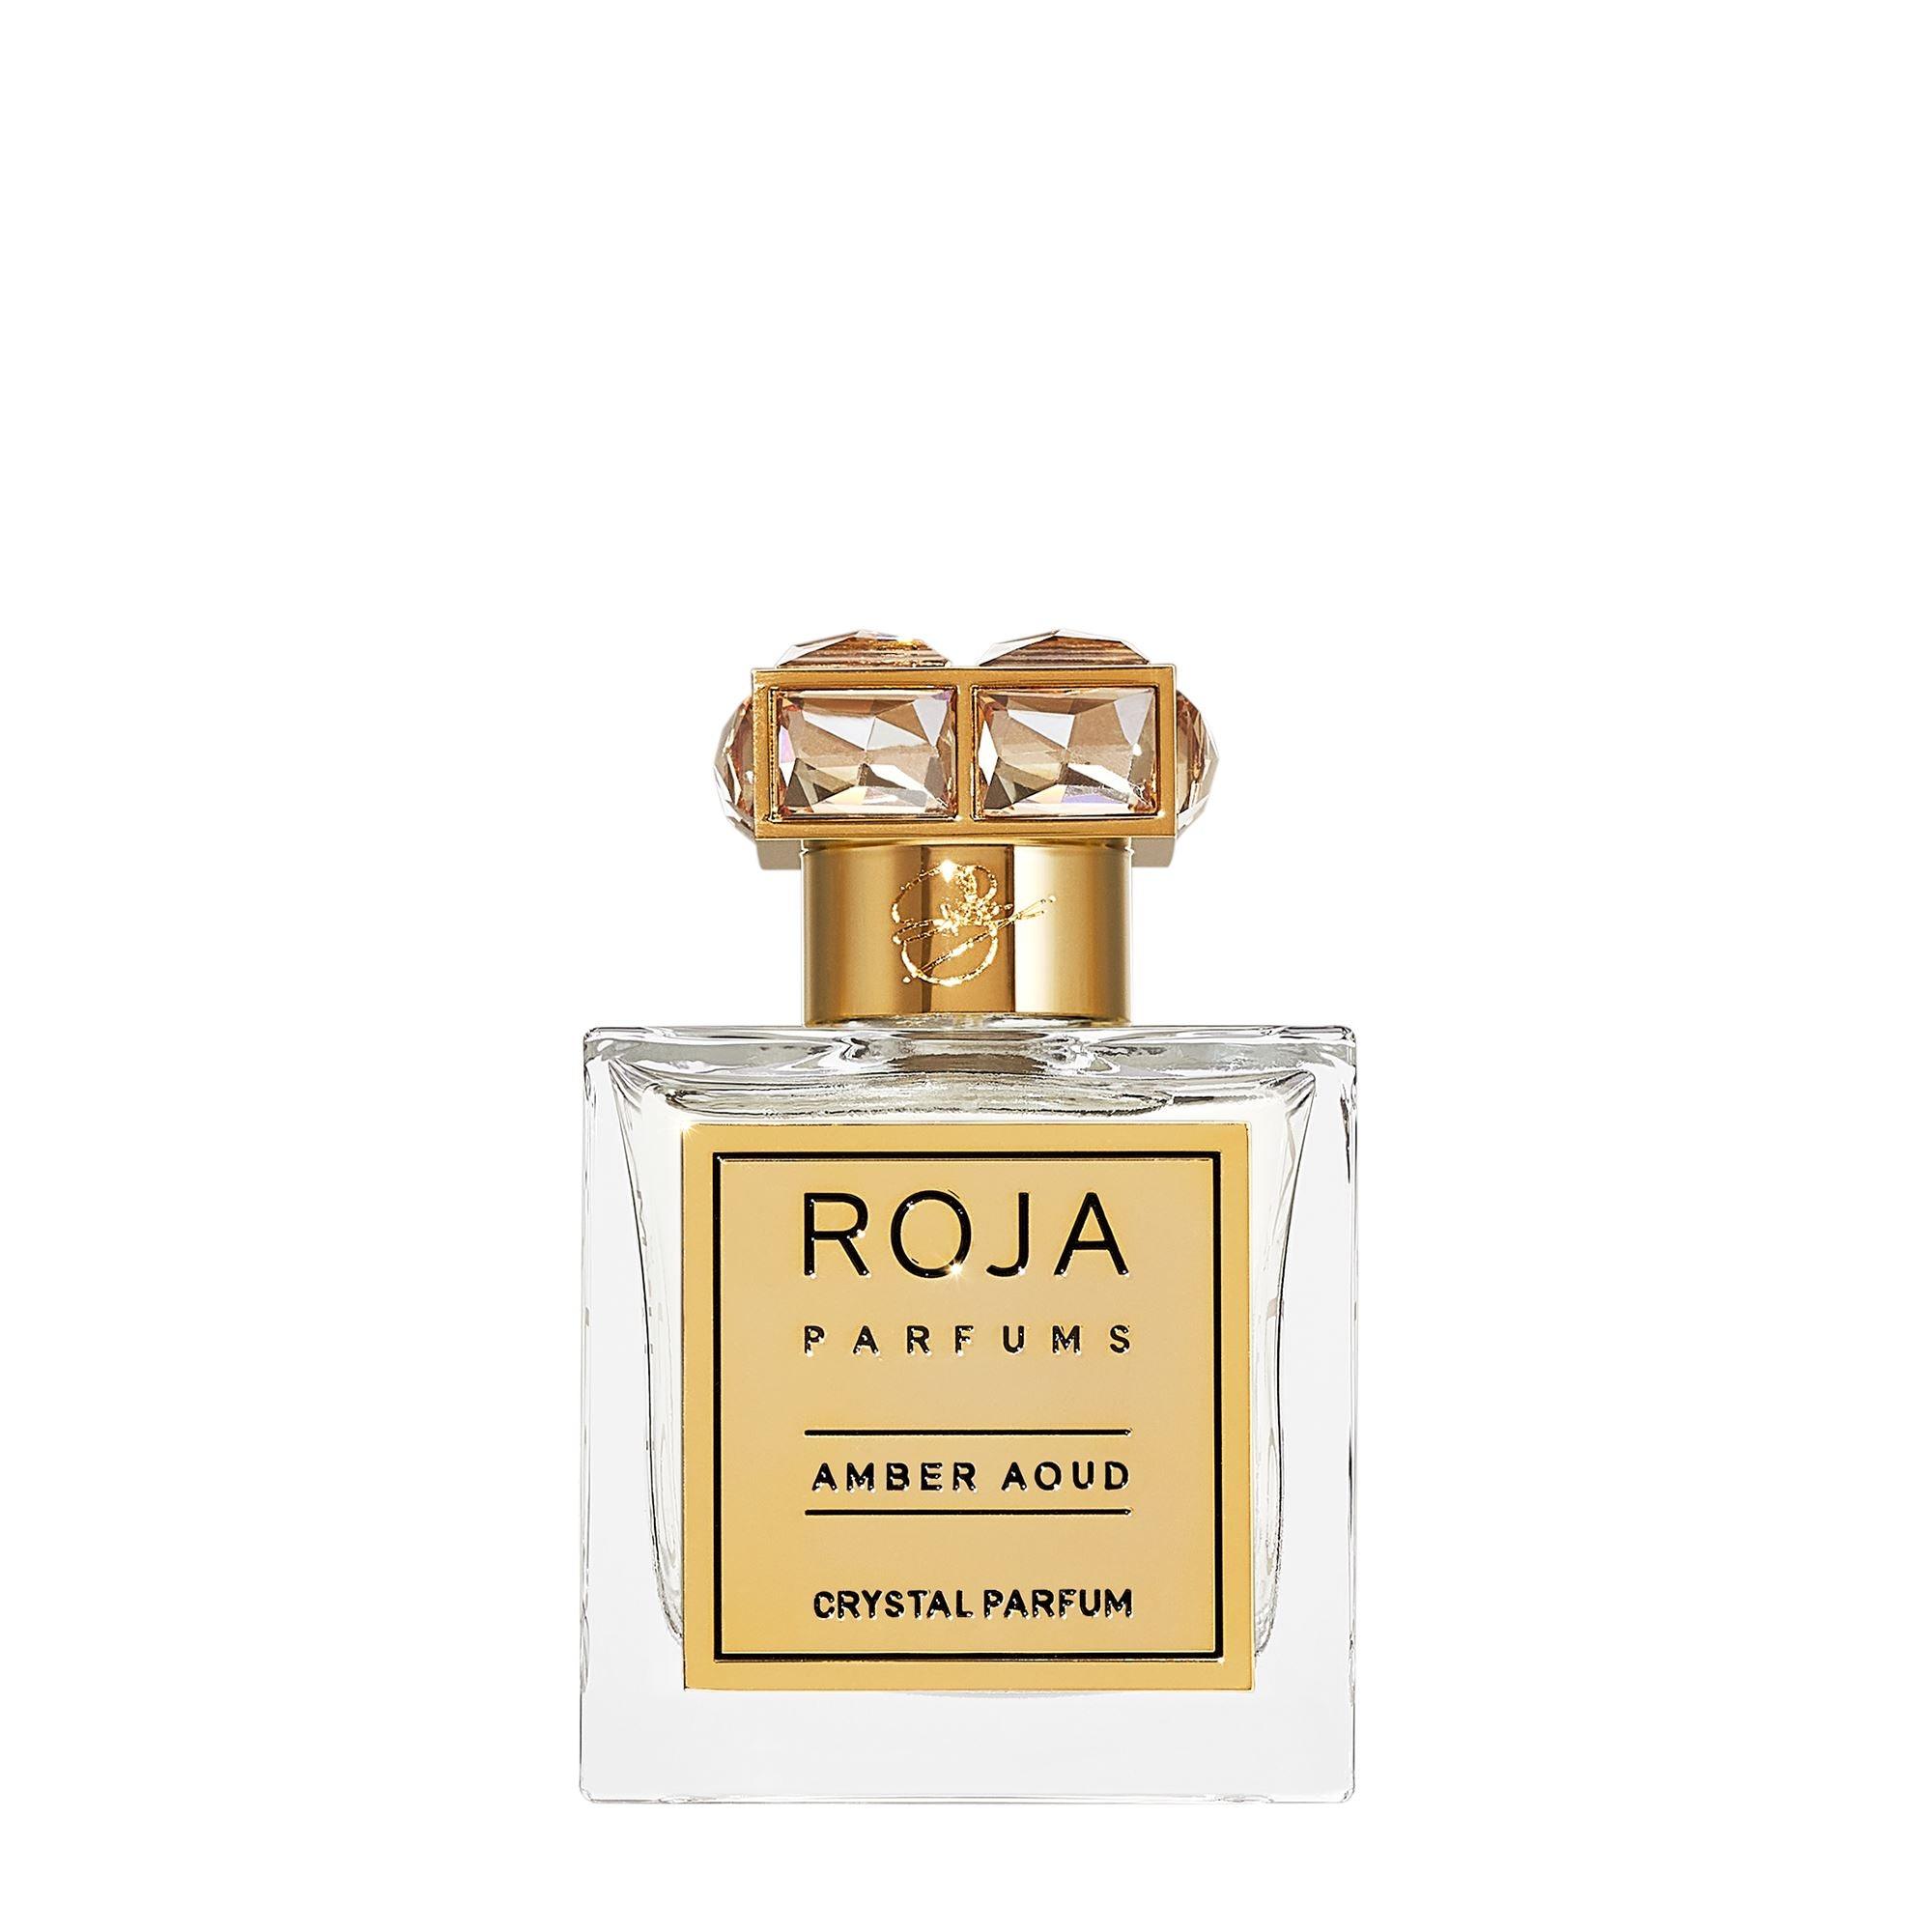 Roja Amber Aoud Crystal Parfum 100ml - undefined - TheFirstScent -Hong Kong